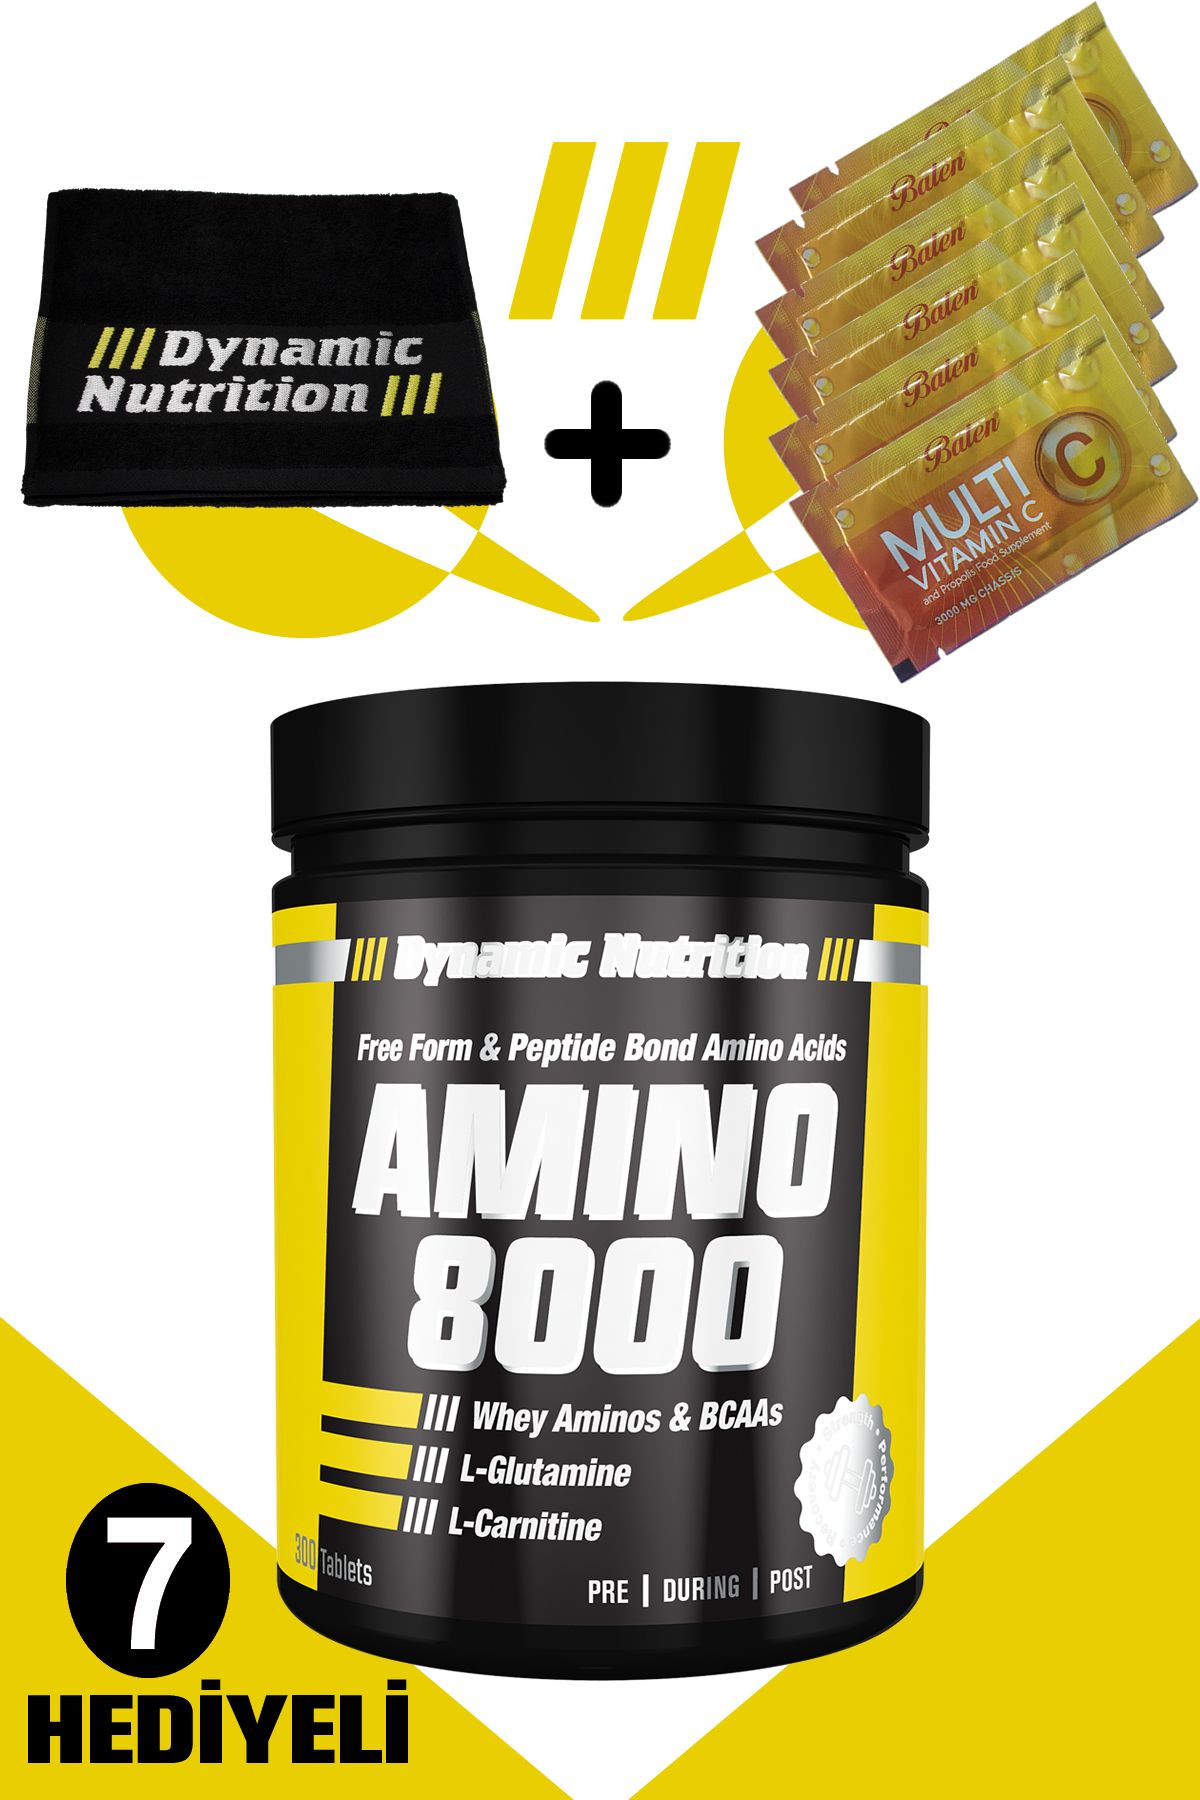 Dynamic Nutrition Dynamic Amino 8000 300 Tablet + 7 Hediyeli (havlu + 6 Adet Multi C Saşe)